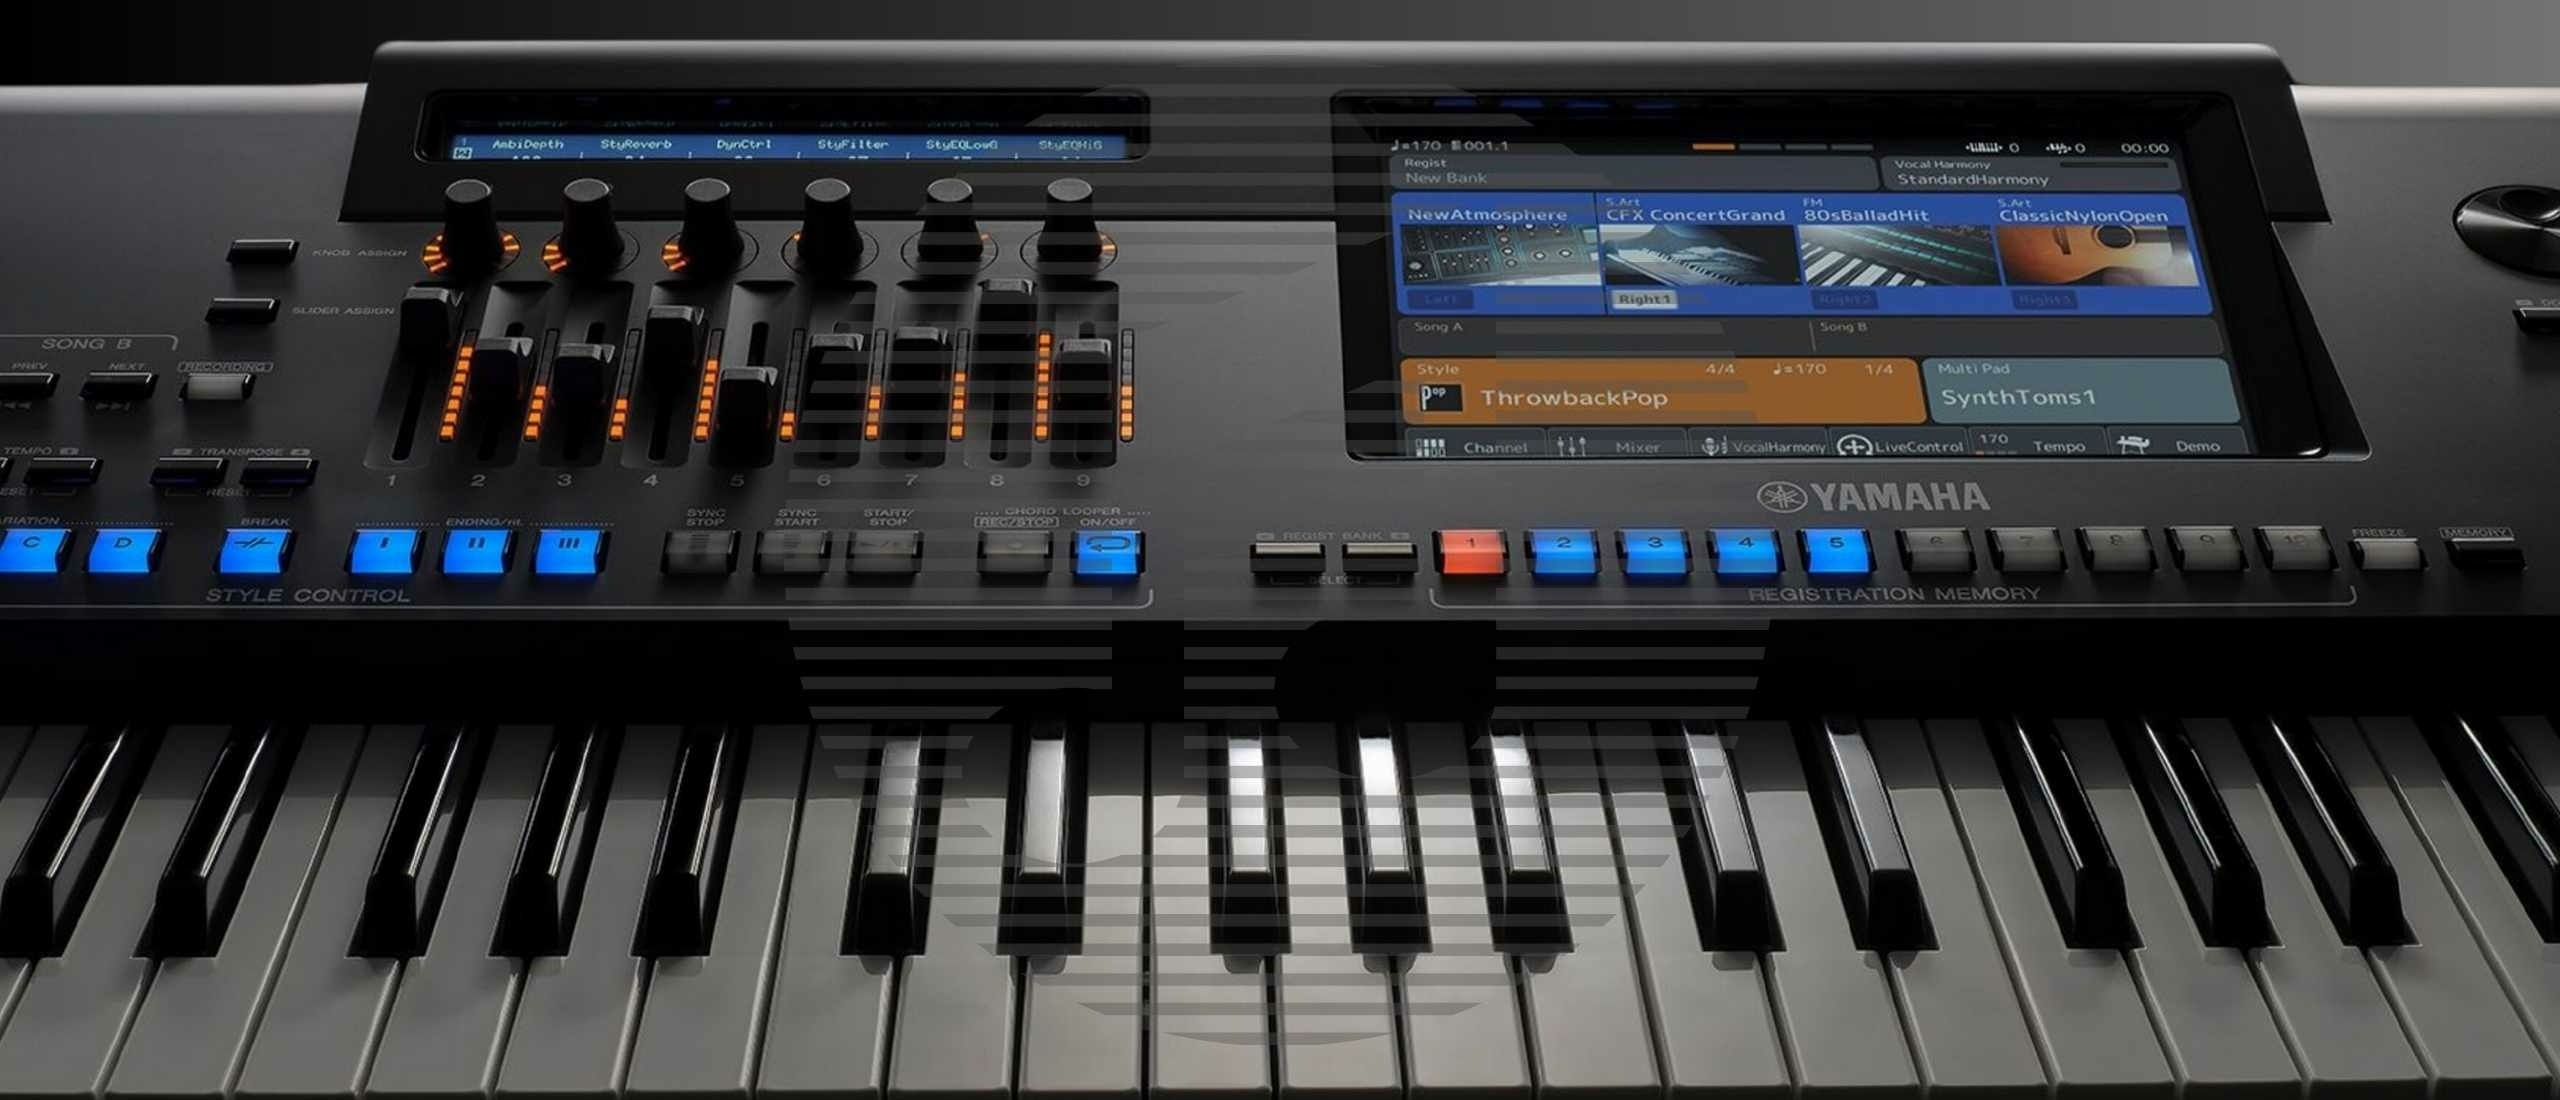 Yamaha Genos2 Keyboard: Een Complete Review